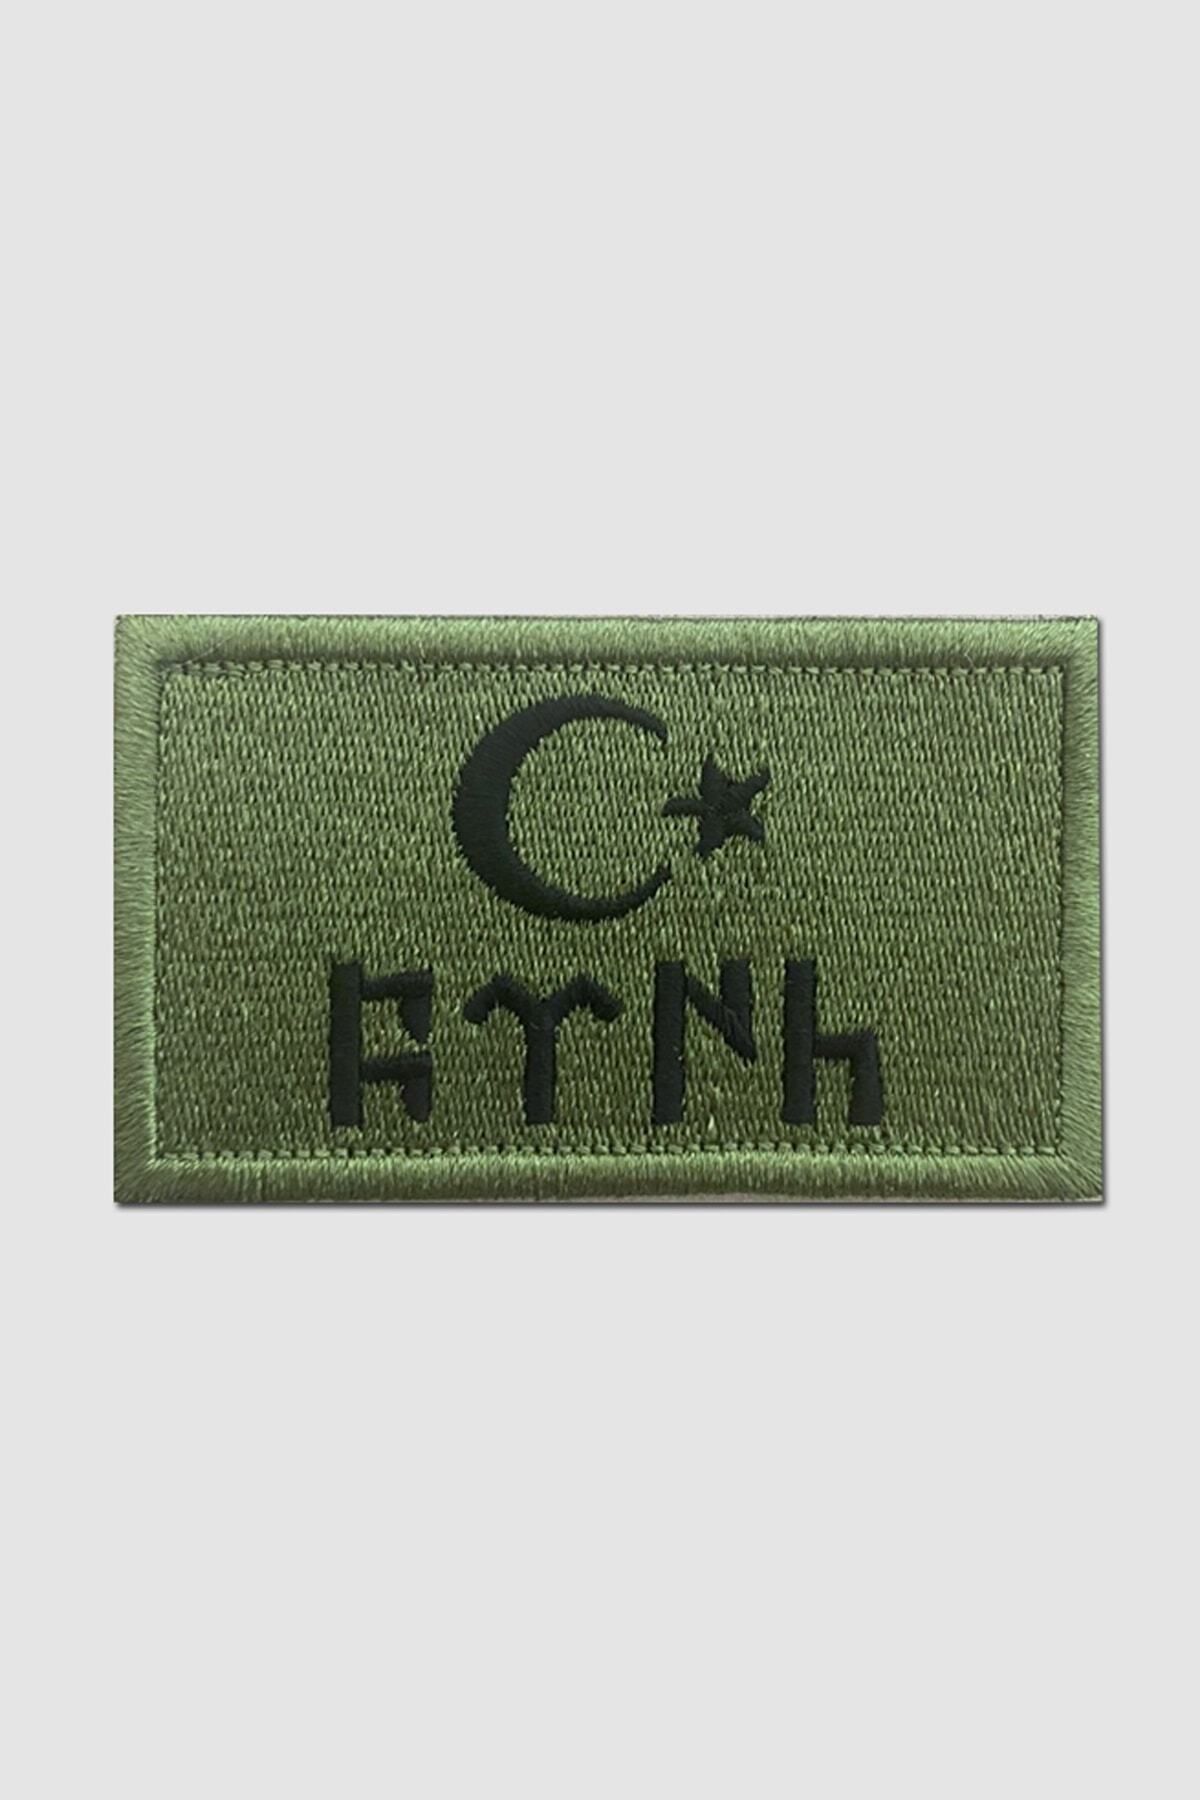 PEÇ Asker Yeşili, Türk Bayrağı Cırtlı Nakışlı Arma, , Yama, Airsoft